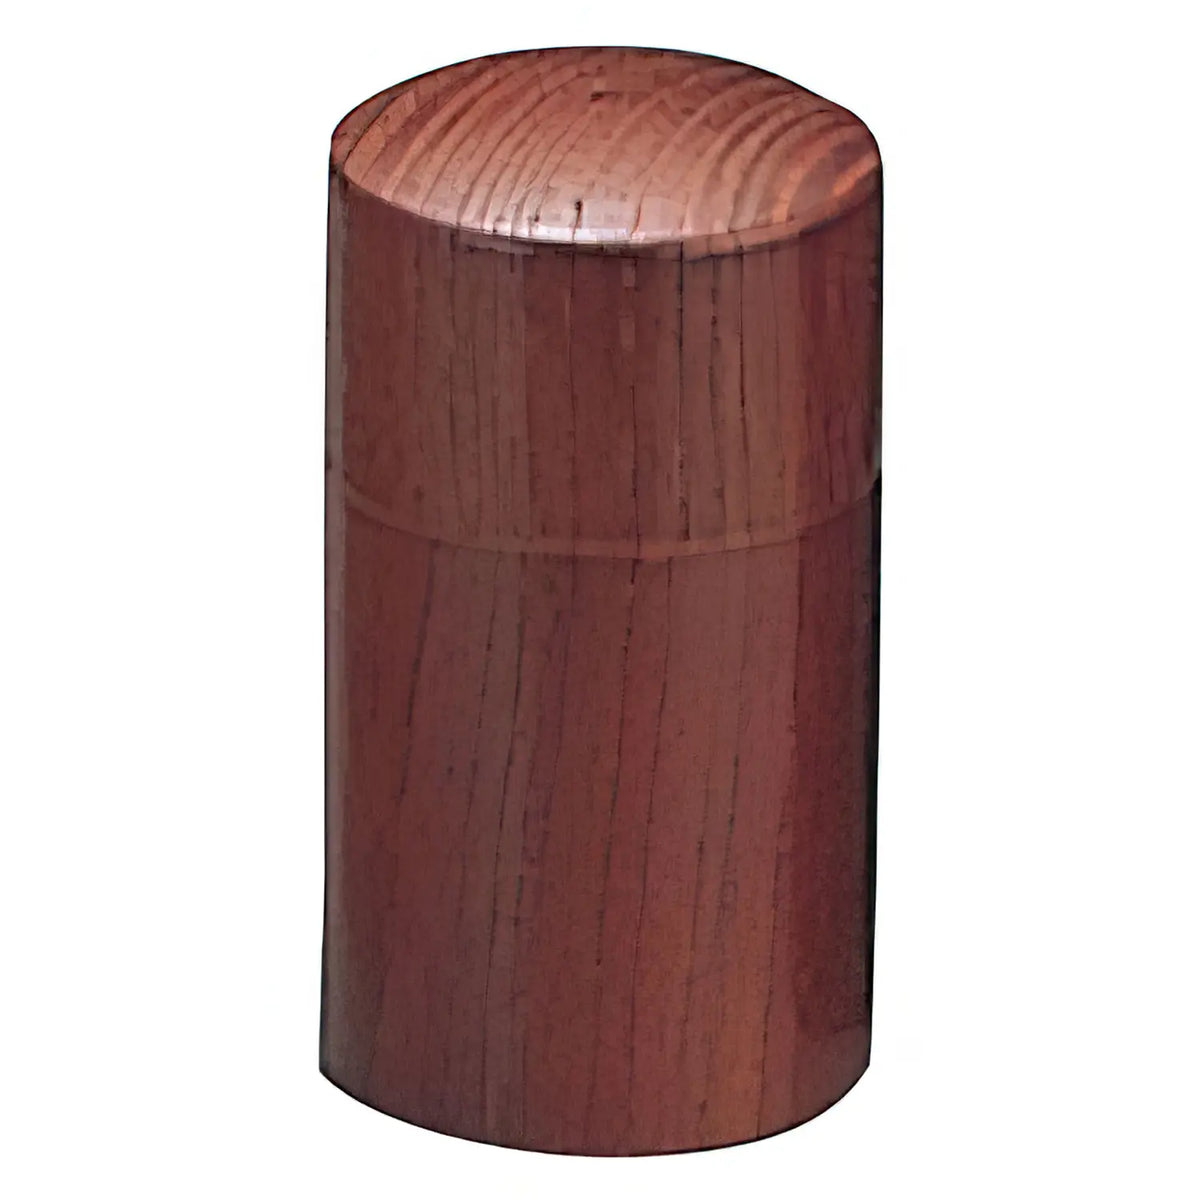 Yamacoh Wooden Salt Shaker